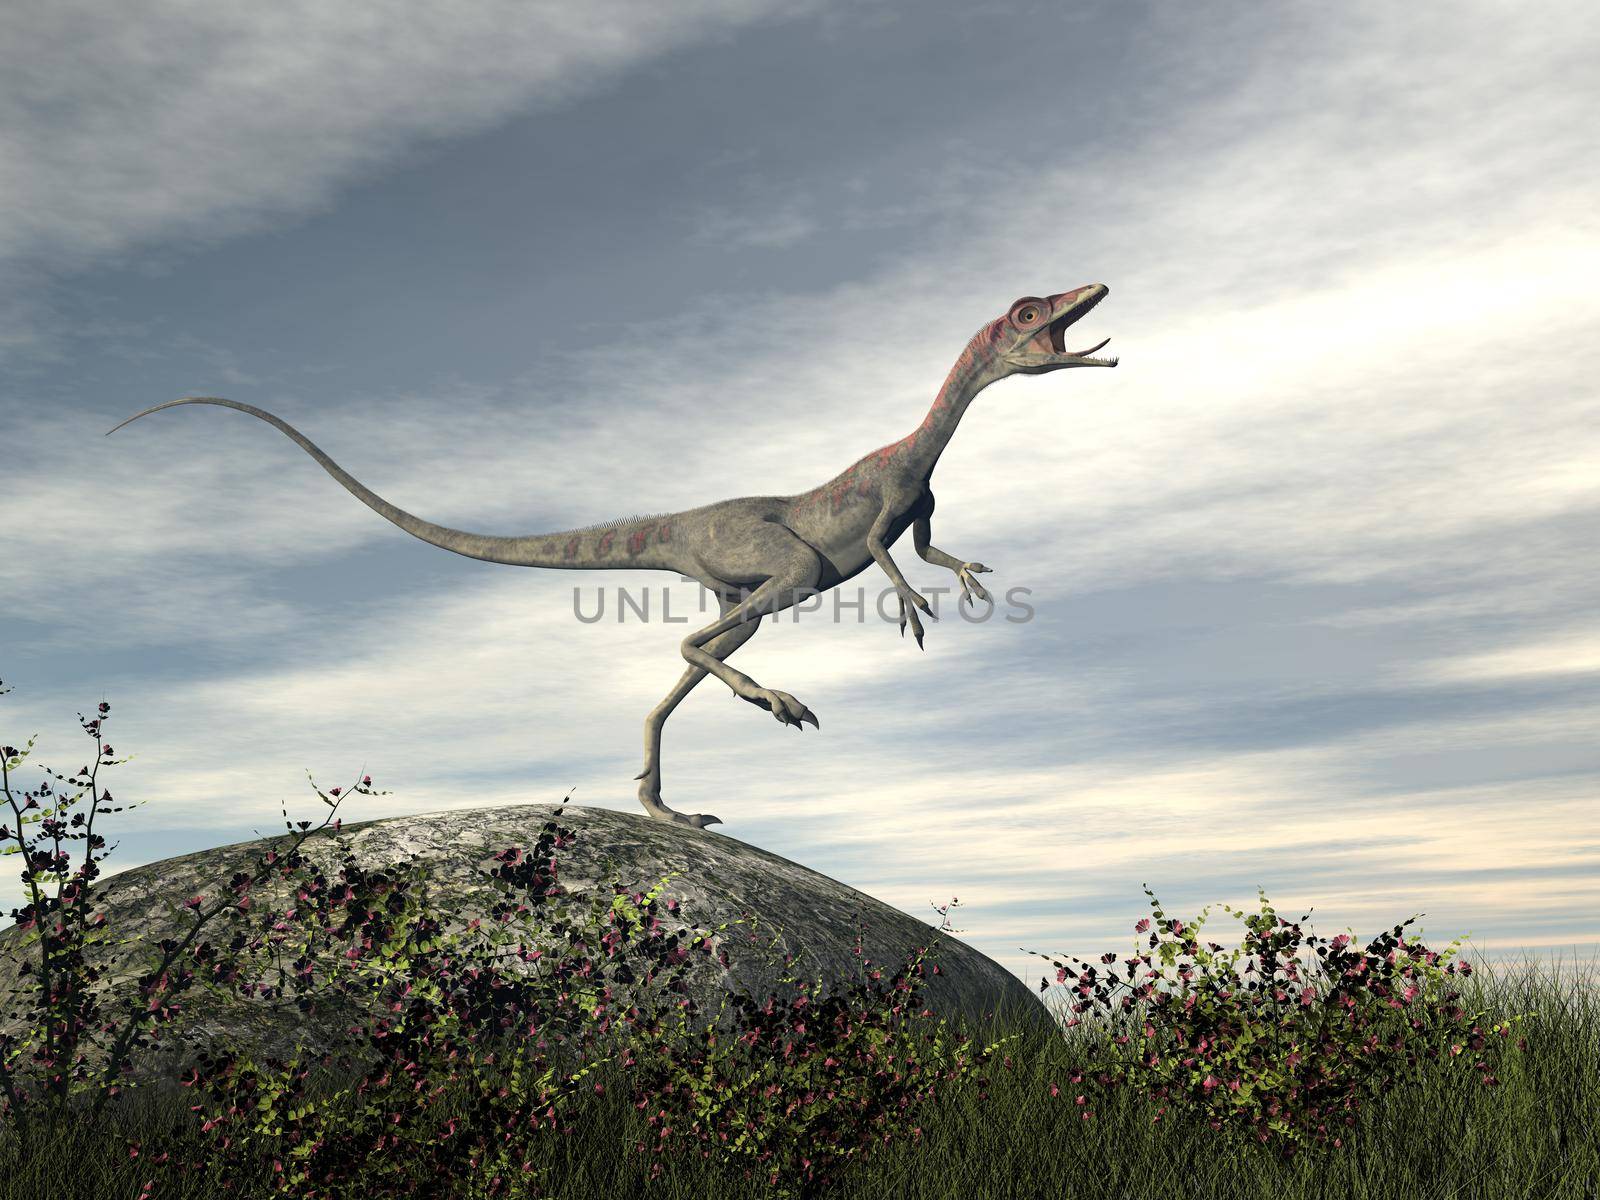 Compsognathus dinosaur standing on a rock - 3D render by Elenaphotos21